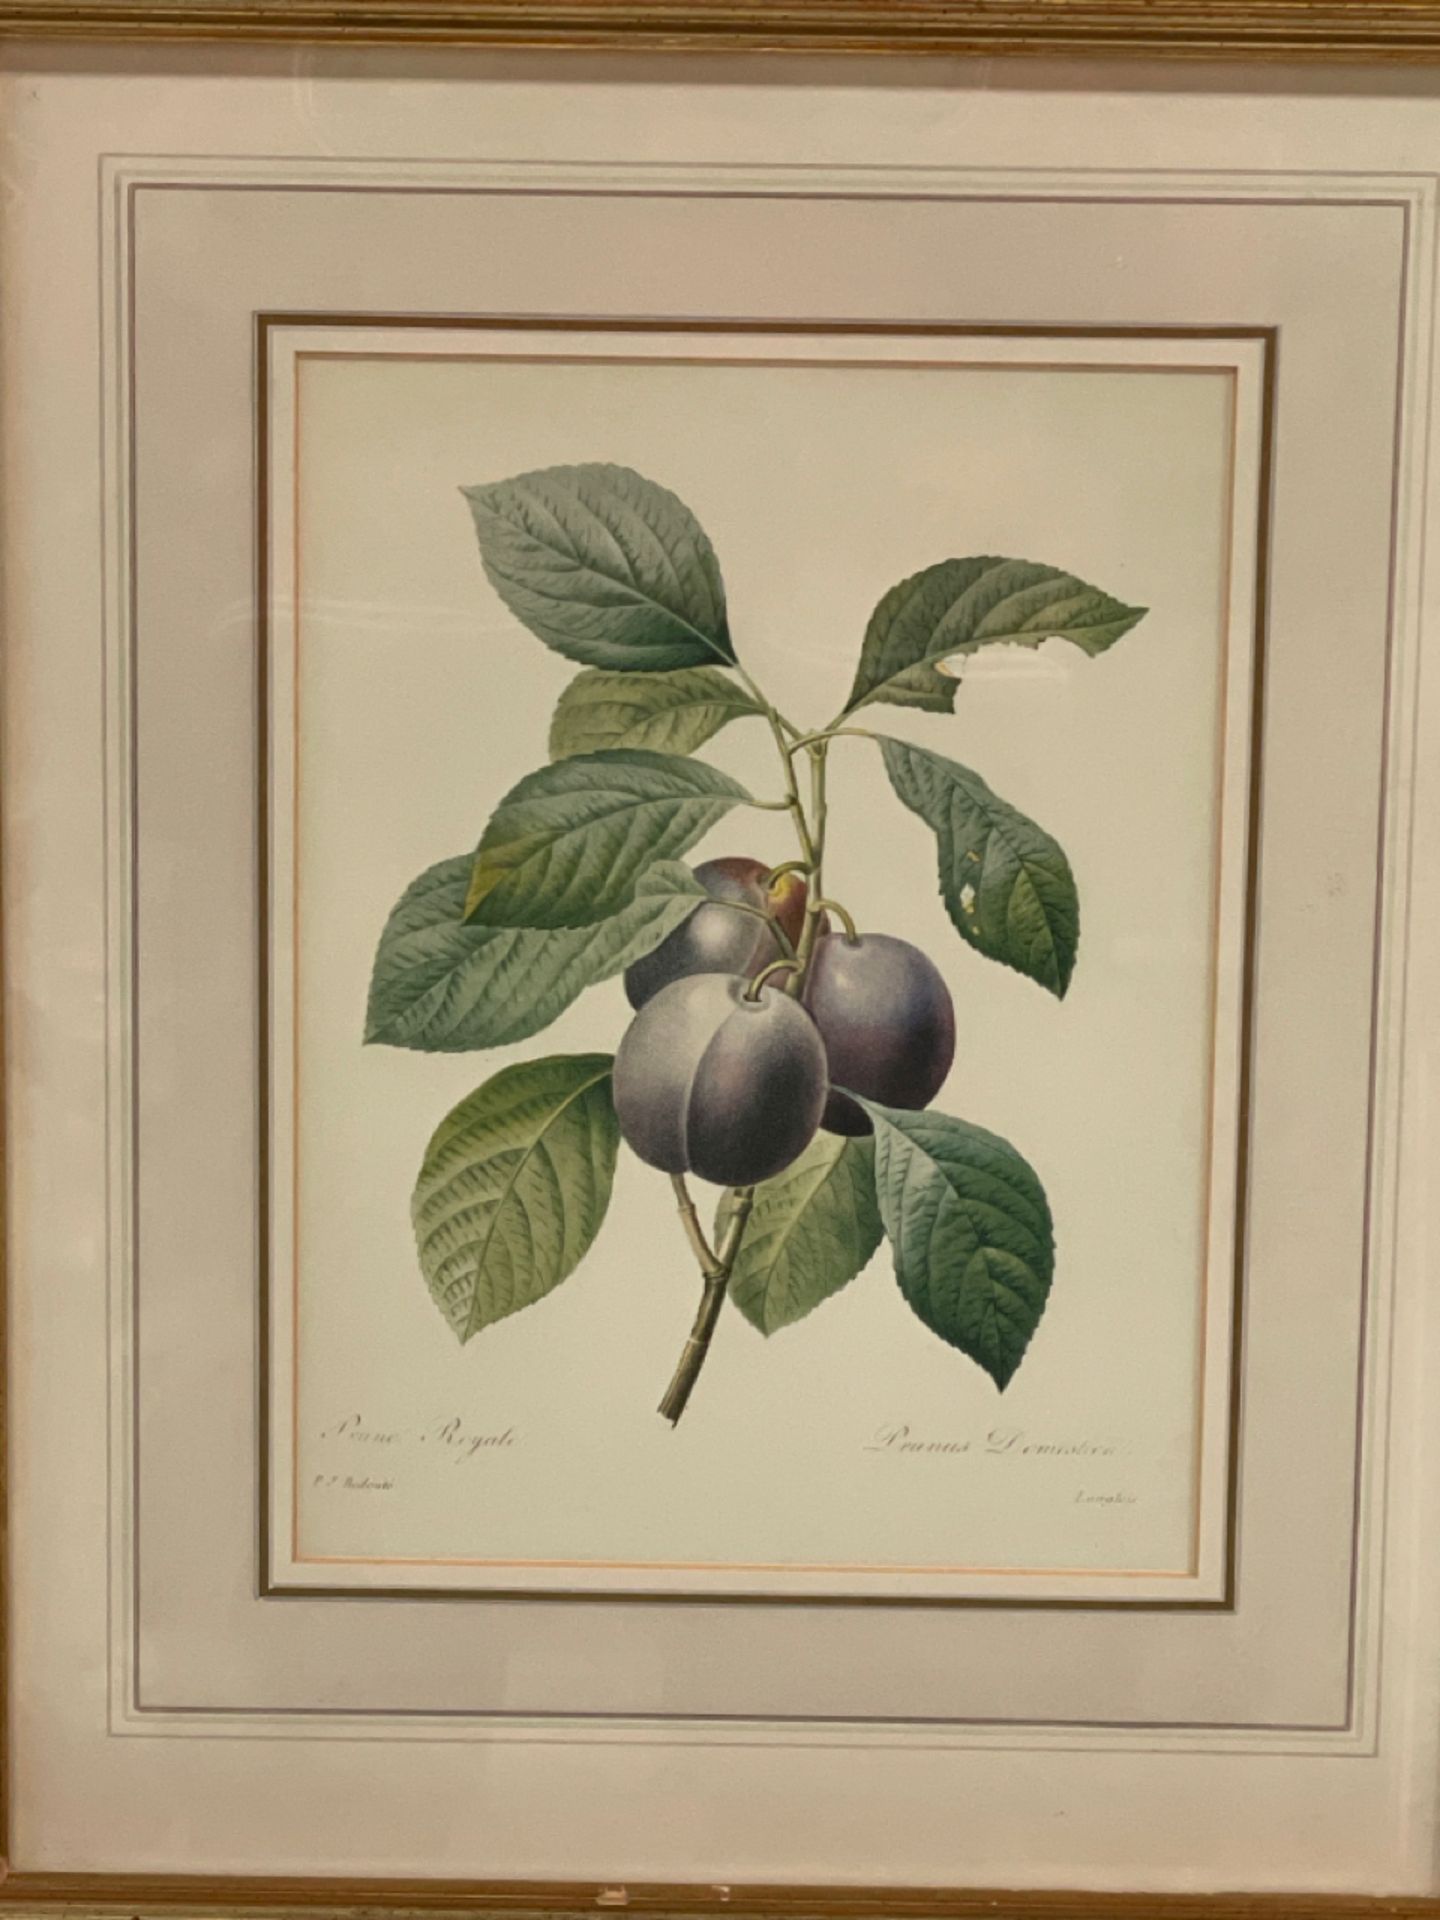 Fruit Artwork Print From Claridge's Hotel - Image 2 of 2